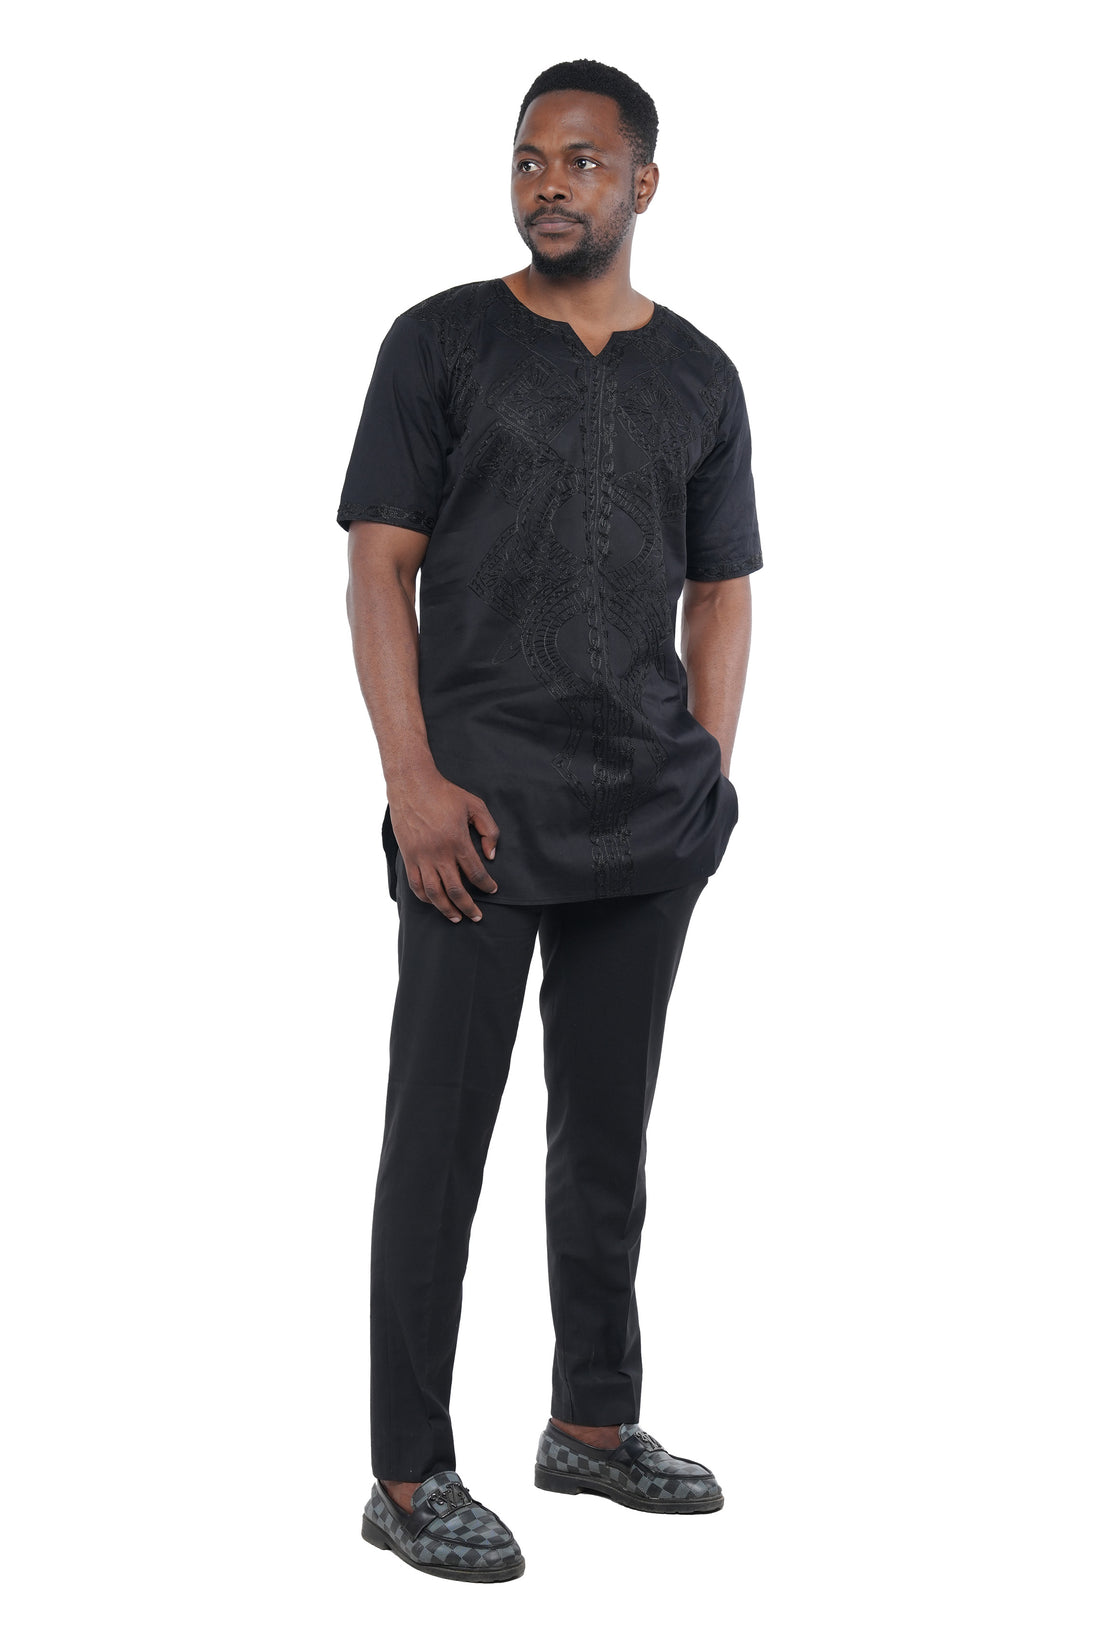 Black Embroidered Long Dashiki Shirt For Men